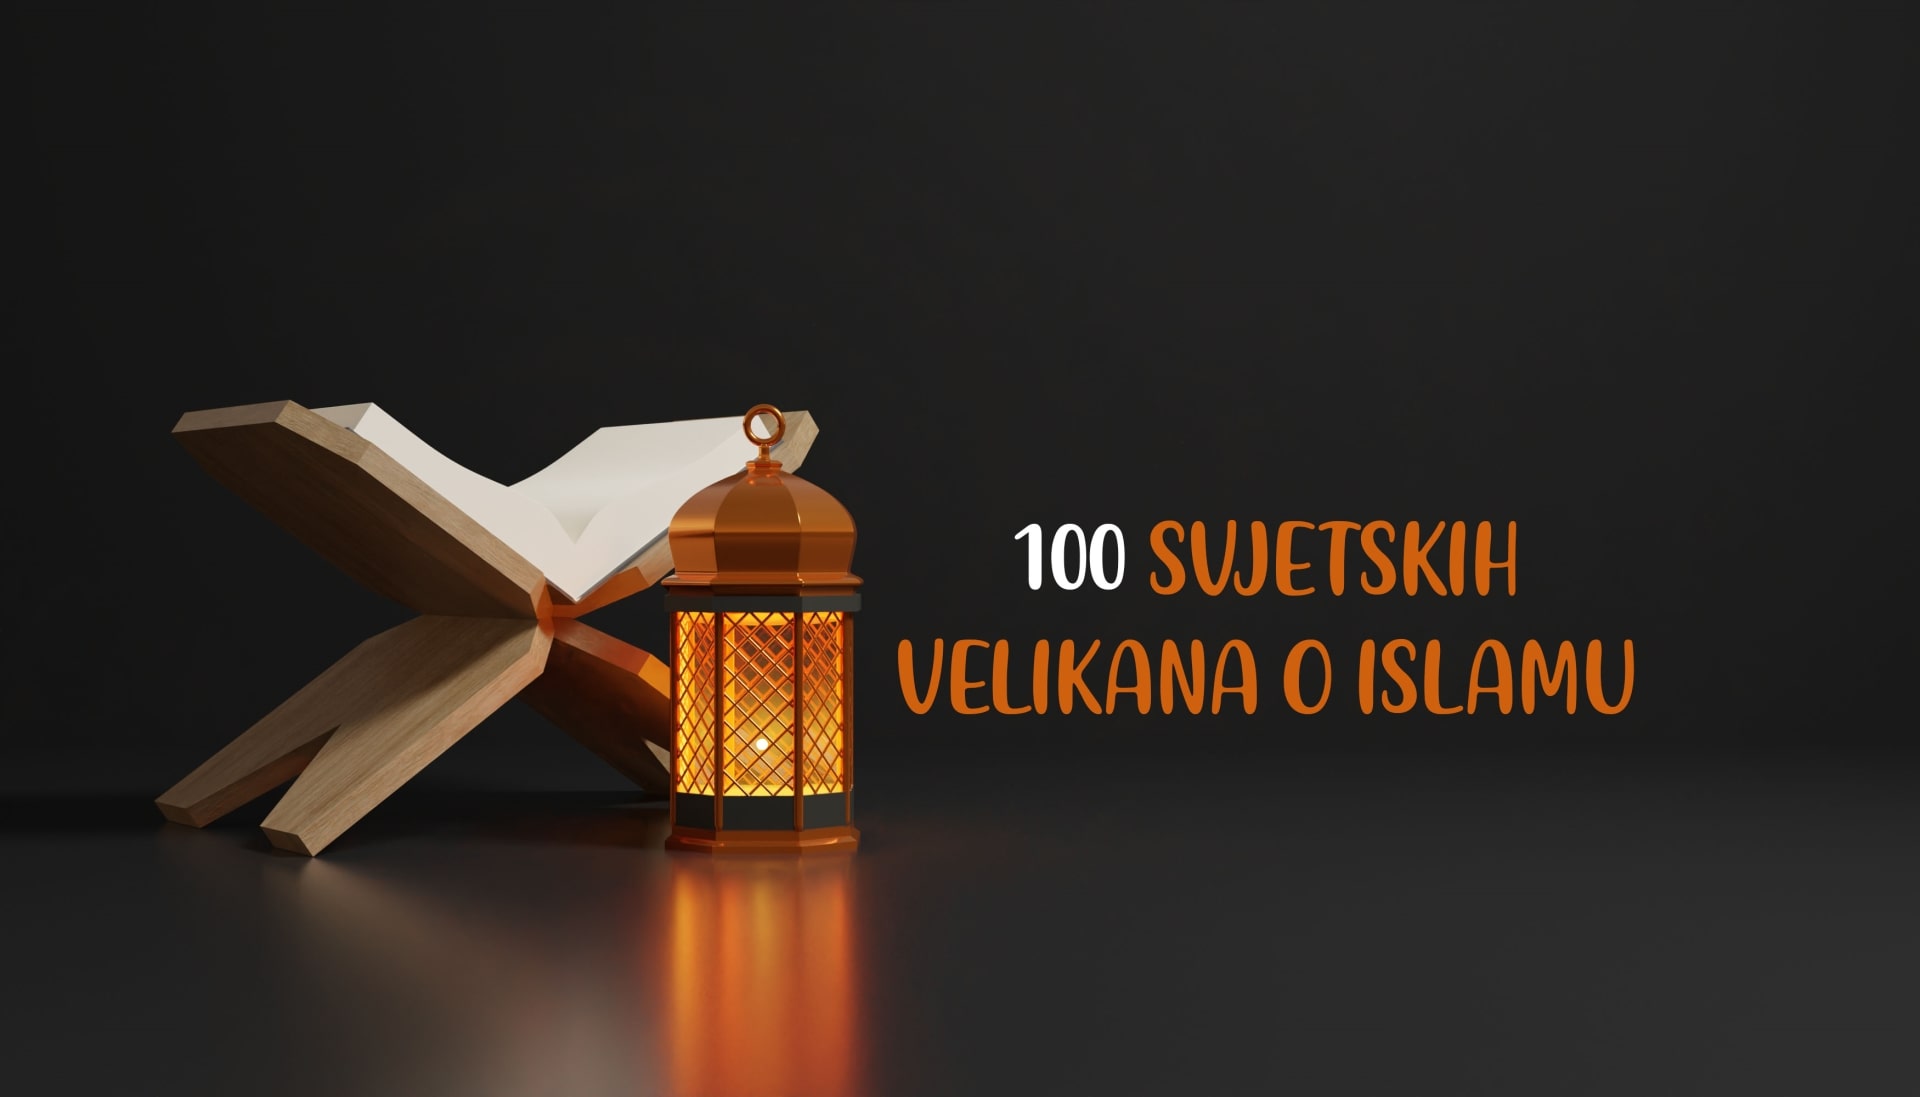 100 svjetskih velikana o islamu – Emile Dermenghem Samir Bikić 100 svjetskih velikana o islamu Poučne priče Islamska literatura Islamski blog El-Kelimeh